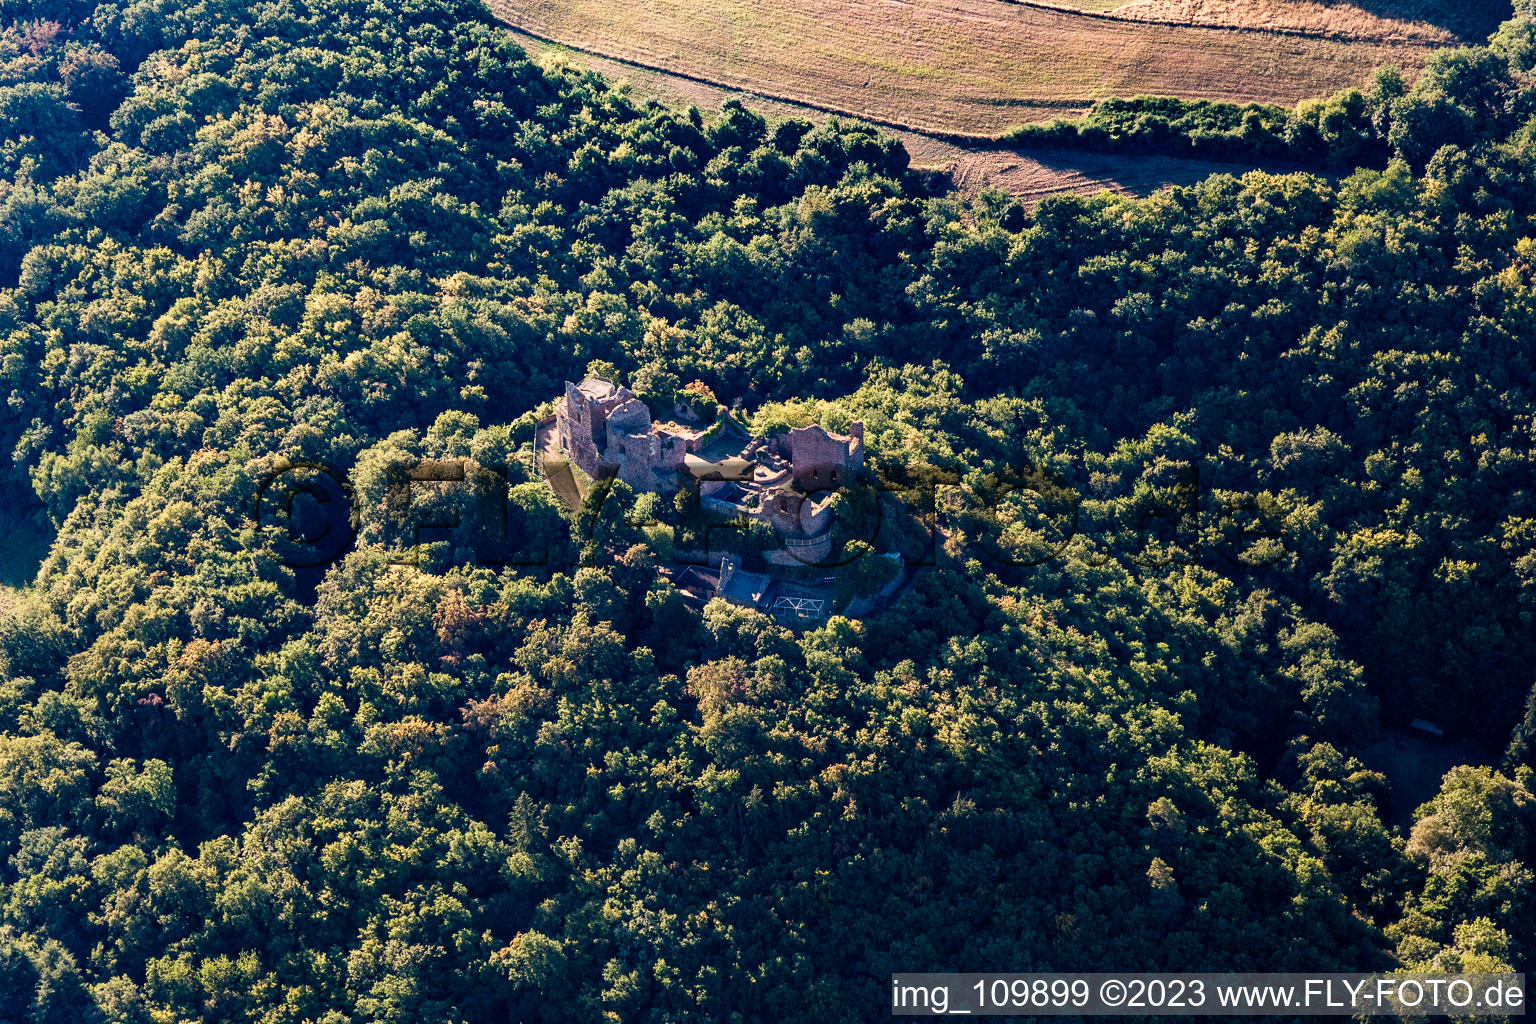 Montfort castle ruins in Hallgarten in the state Rhineland-Palatinate, Germany